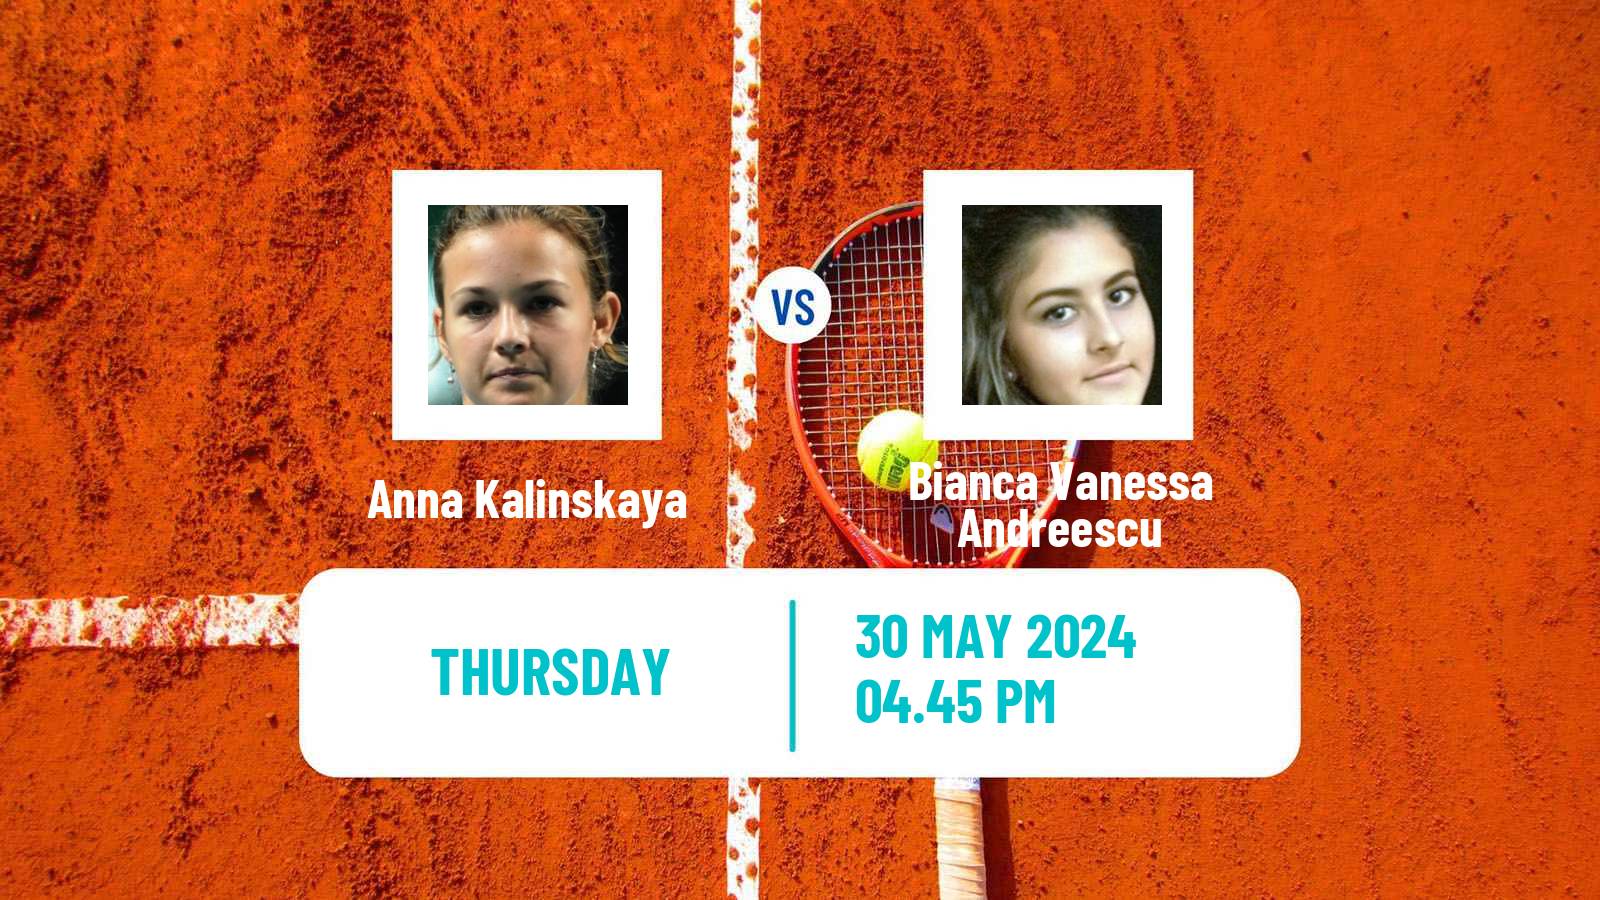 Tennis WTA Roland Garros Anna Kalinskaya - Bianca Vanessa Andreescu